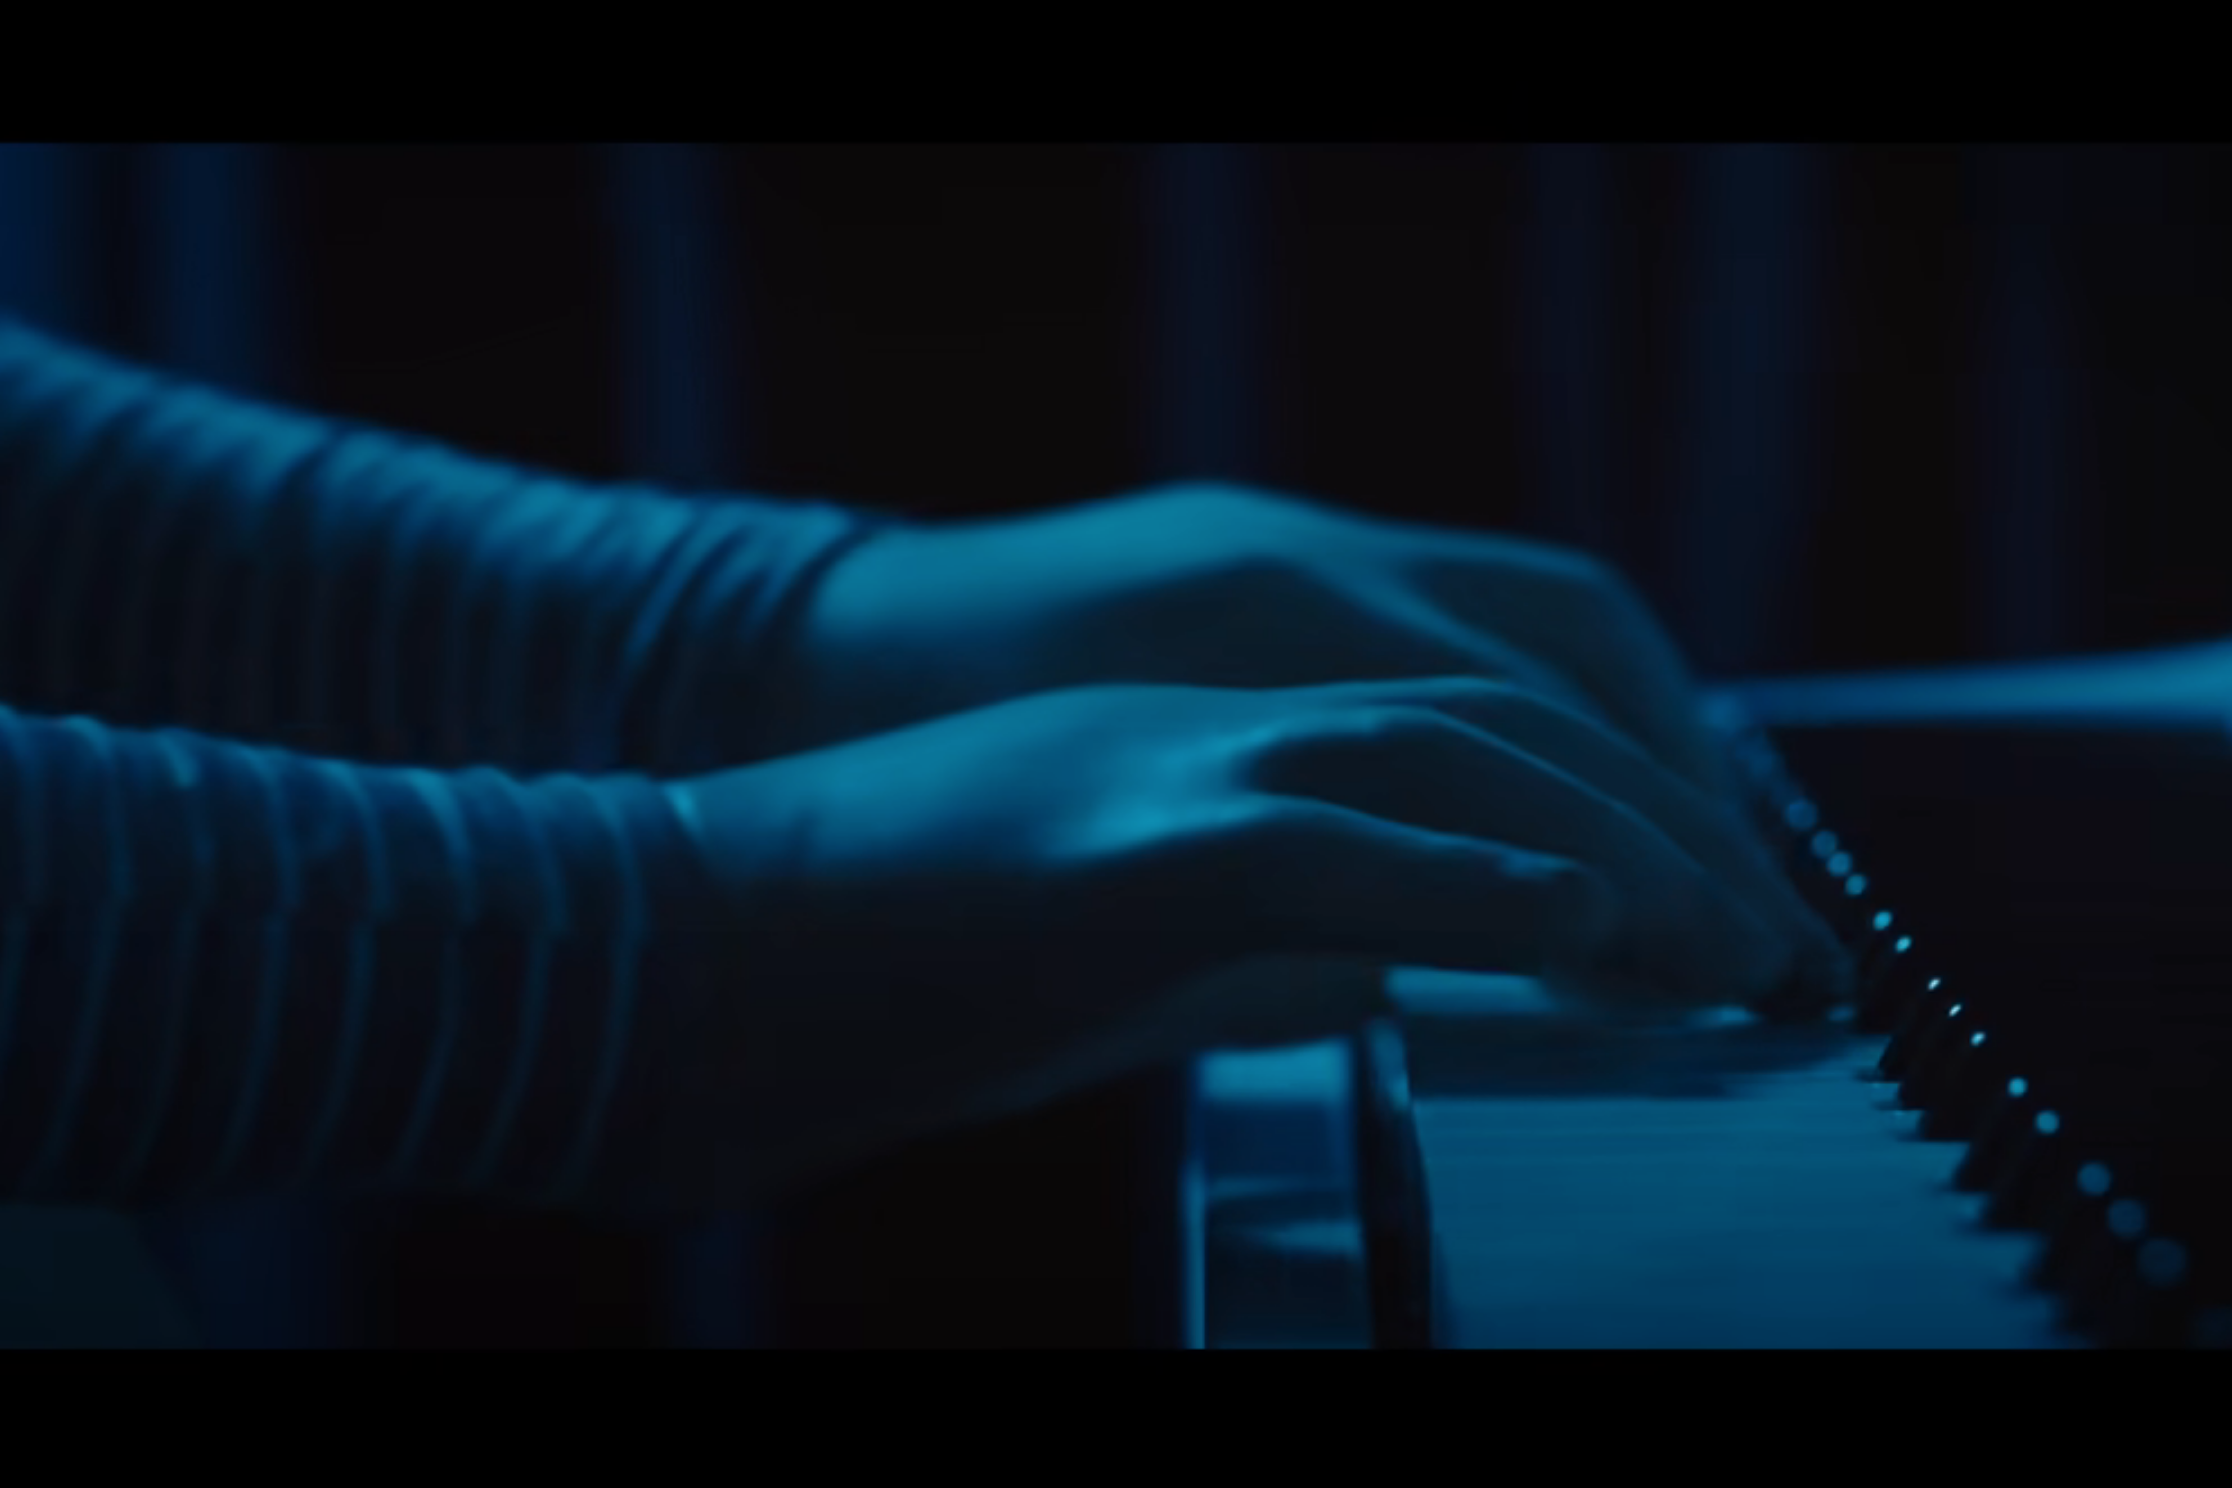 M3gan's hands at the piano